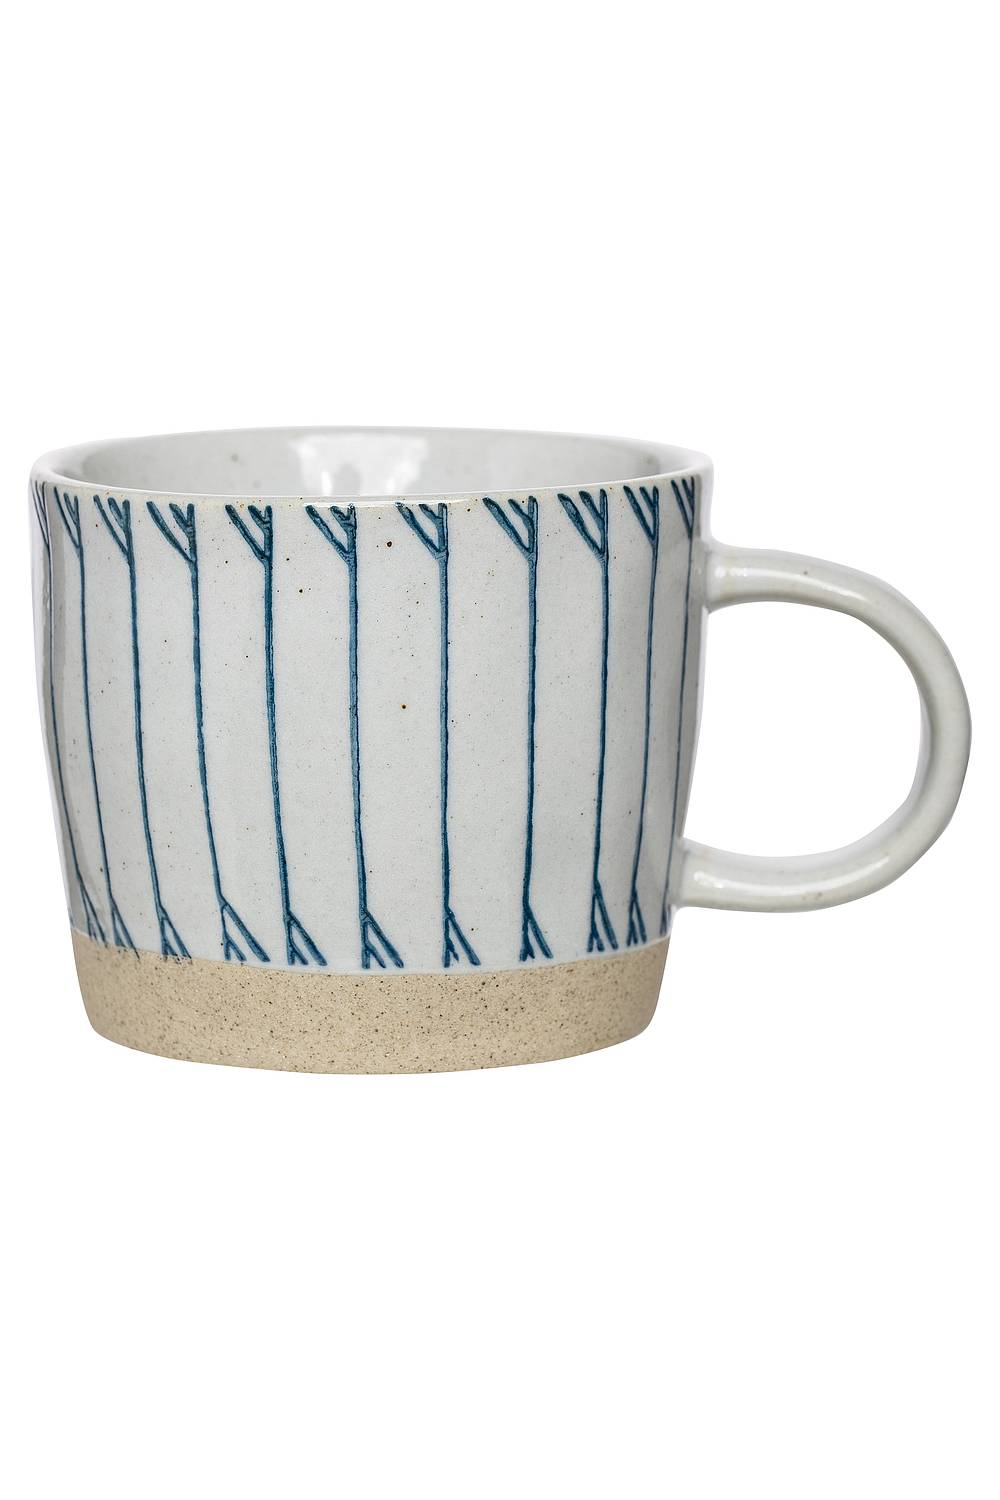 Tranquillo Mug - Rustic Stripe - Sustainable